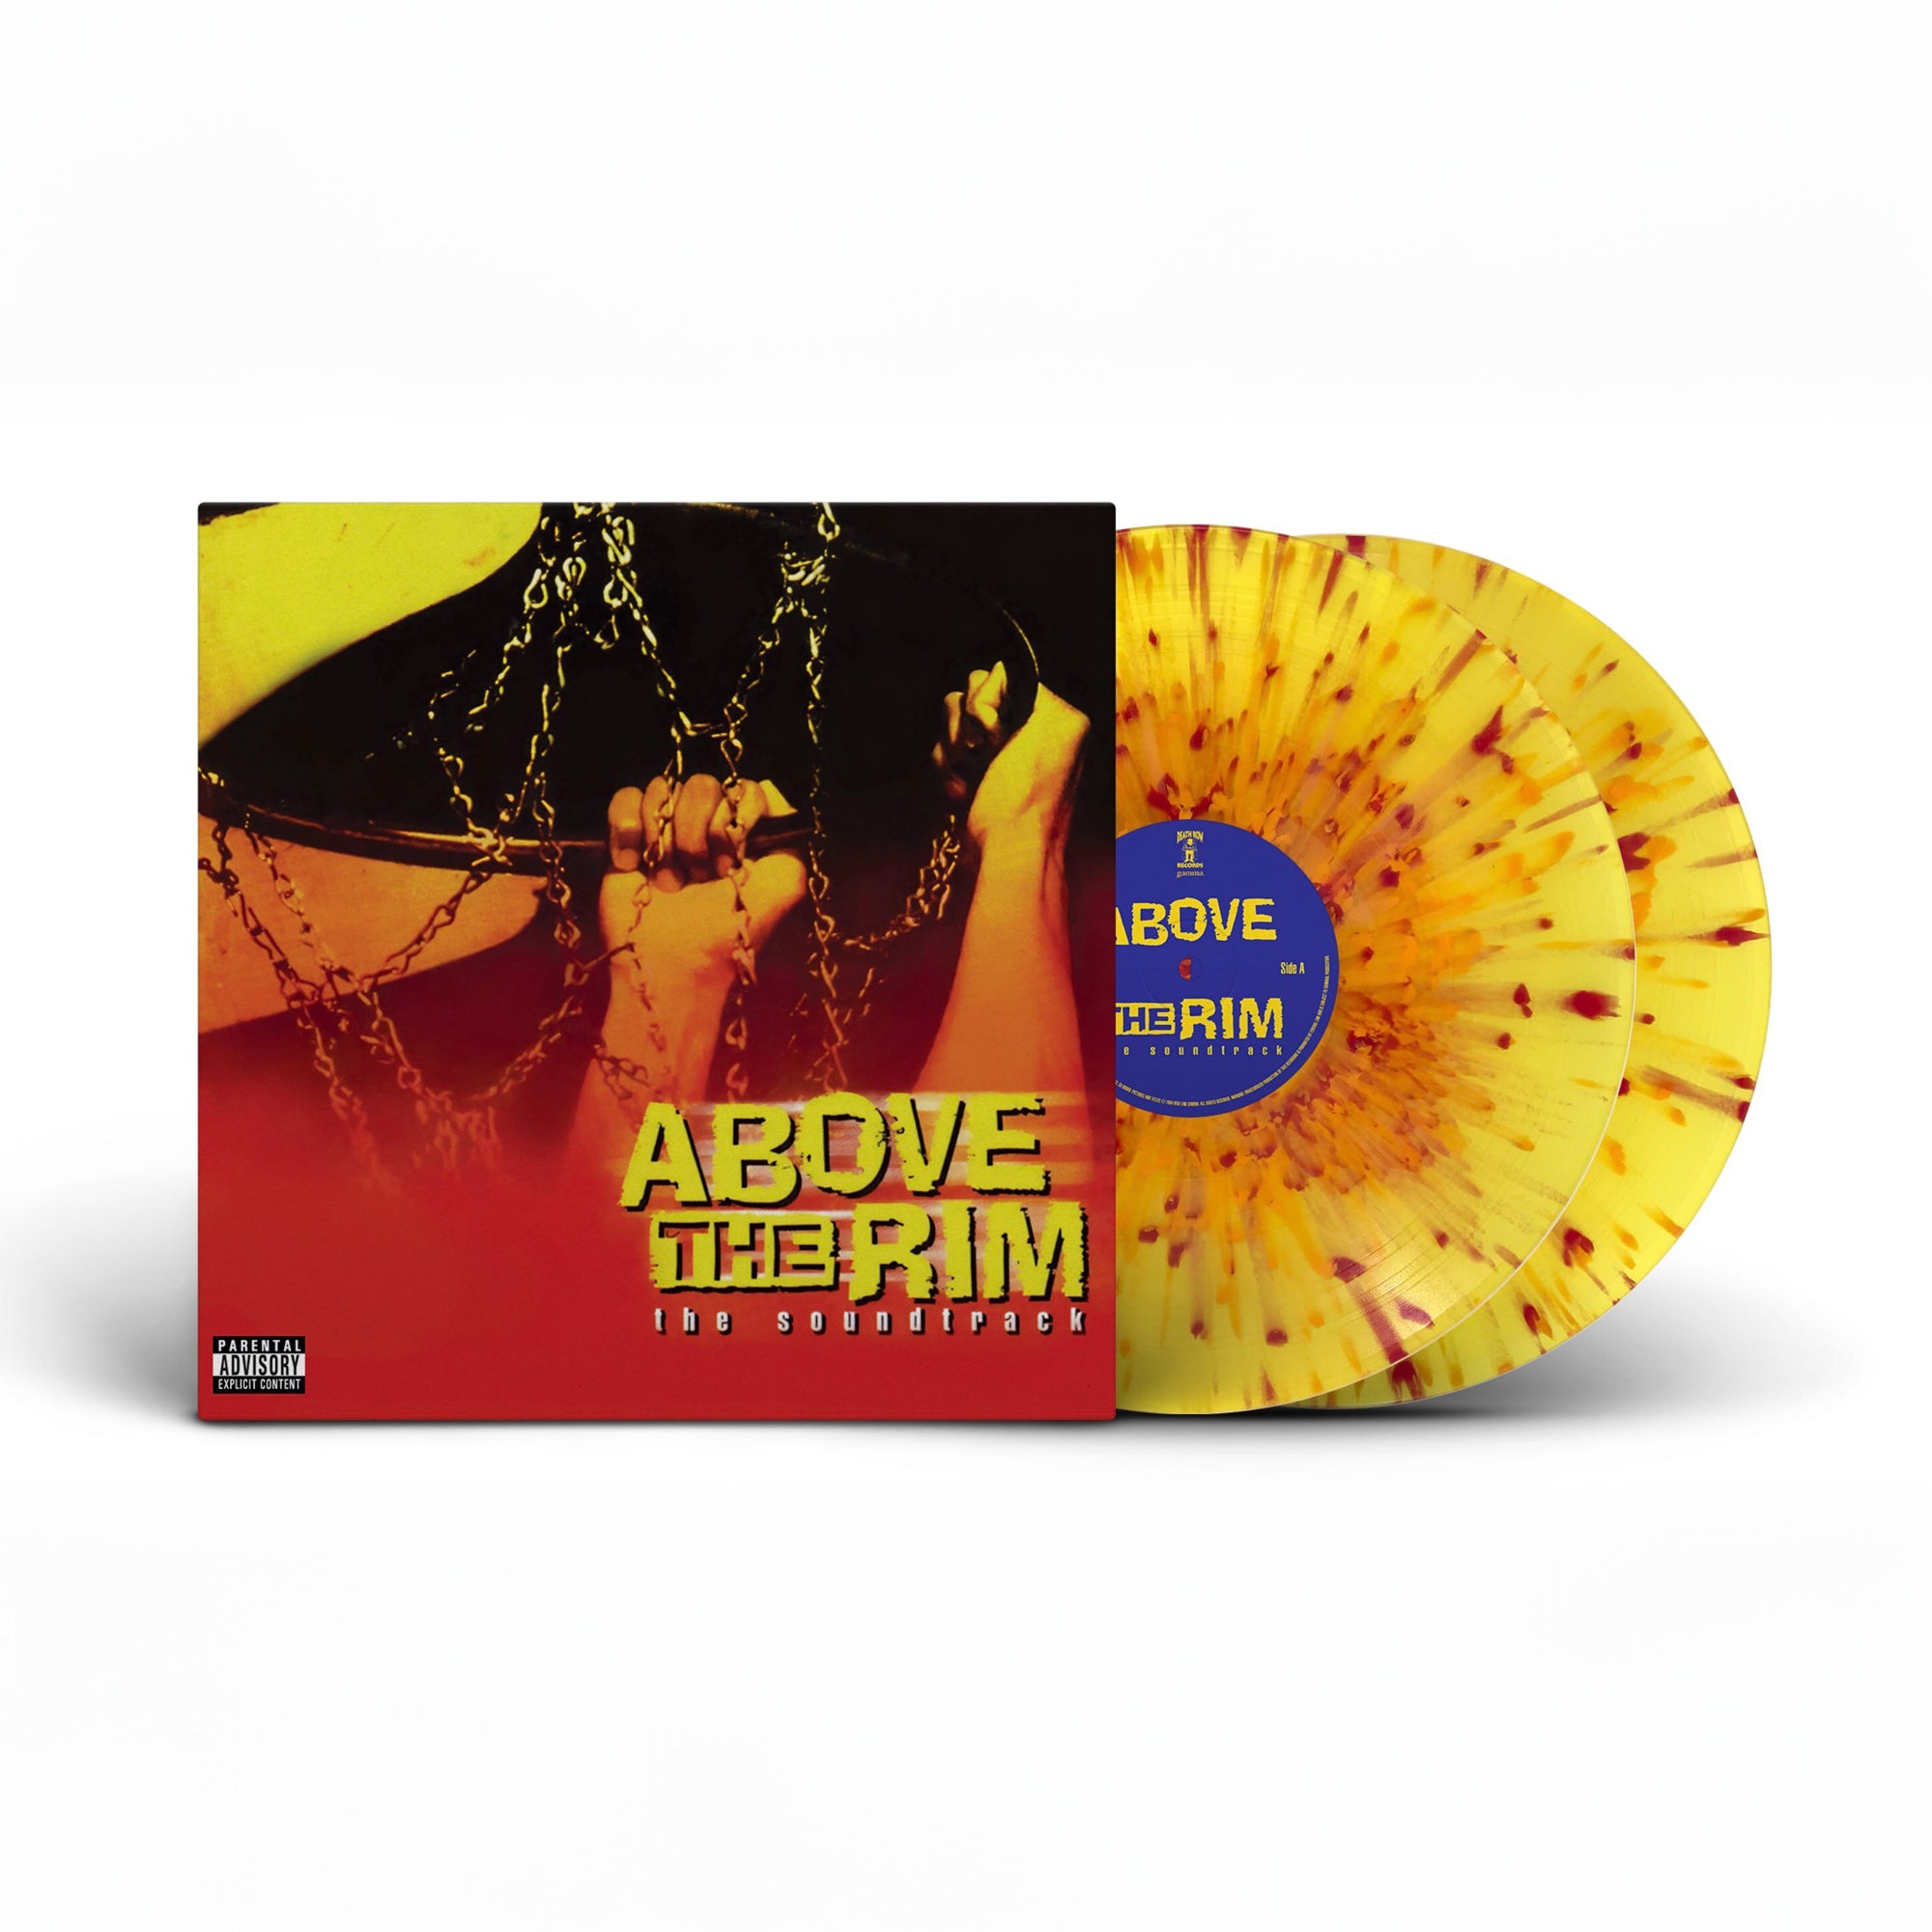 Various Artists - Above The Rim (The Soundtrack - 30th Anniversary): Yellow w/ Orange & Red Splatter Vinyl 2LP